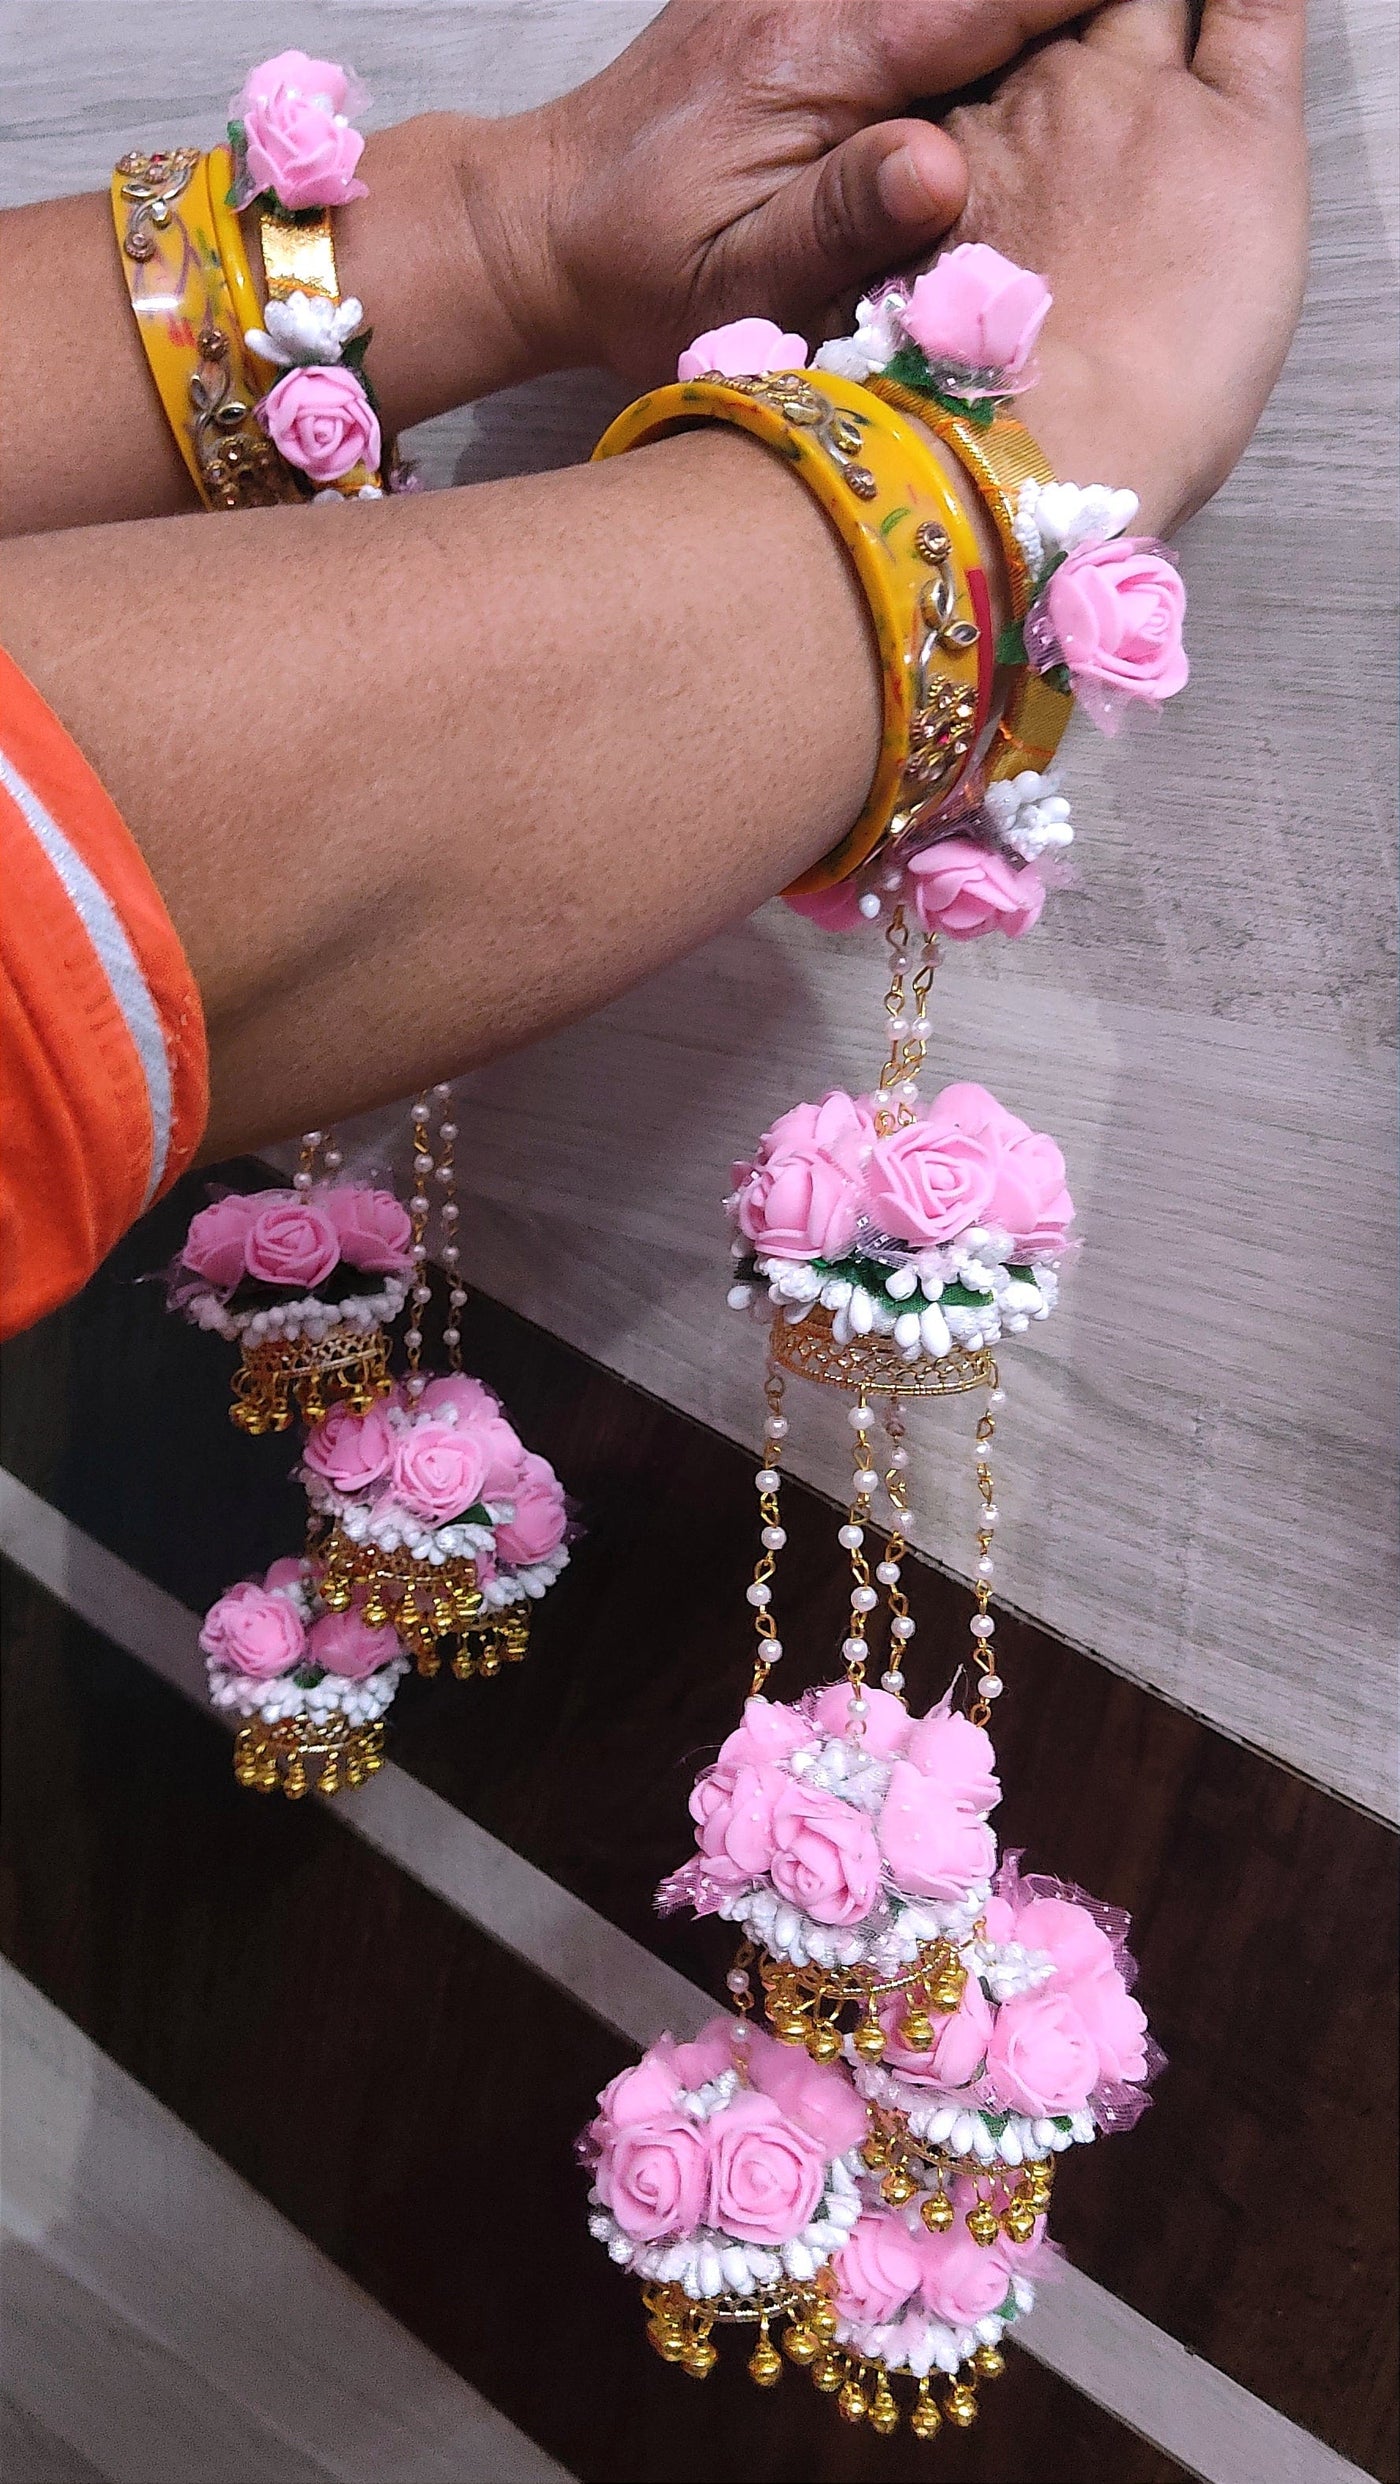 Lamansh Floral 🌺 Kalire 2 Floral Bangles with Kaleere Set / Baby Pink & White LAMANSH® Pair of Floral 🌺 Bangles with Kaleere / Artificial Flower Kaleere set for Haldi Mehendi ceremony